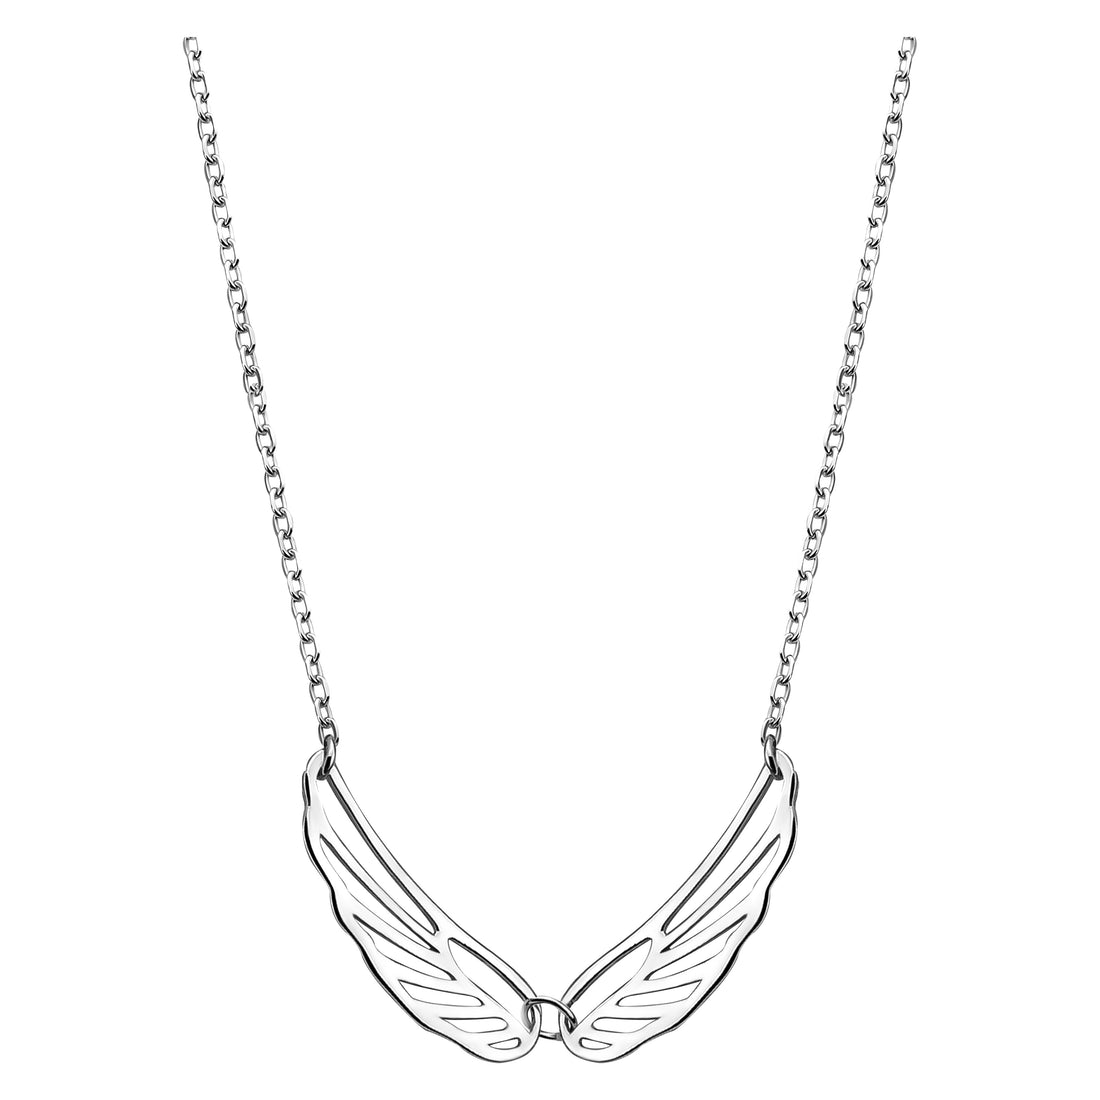 Flügel Halskette in 925 Silber